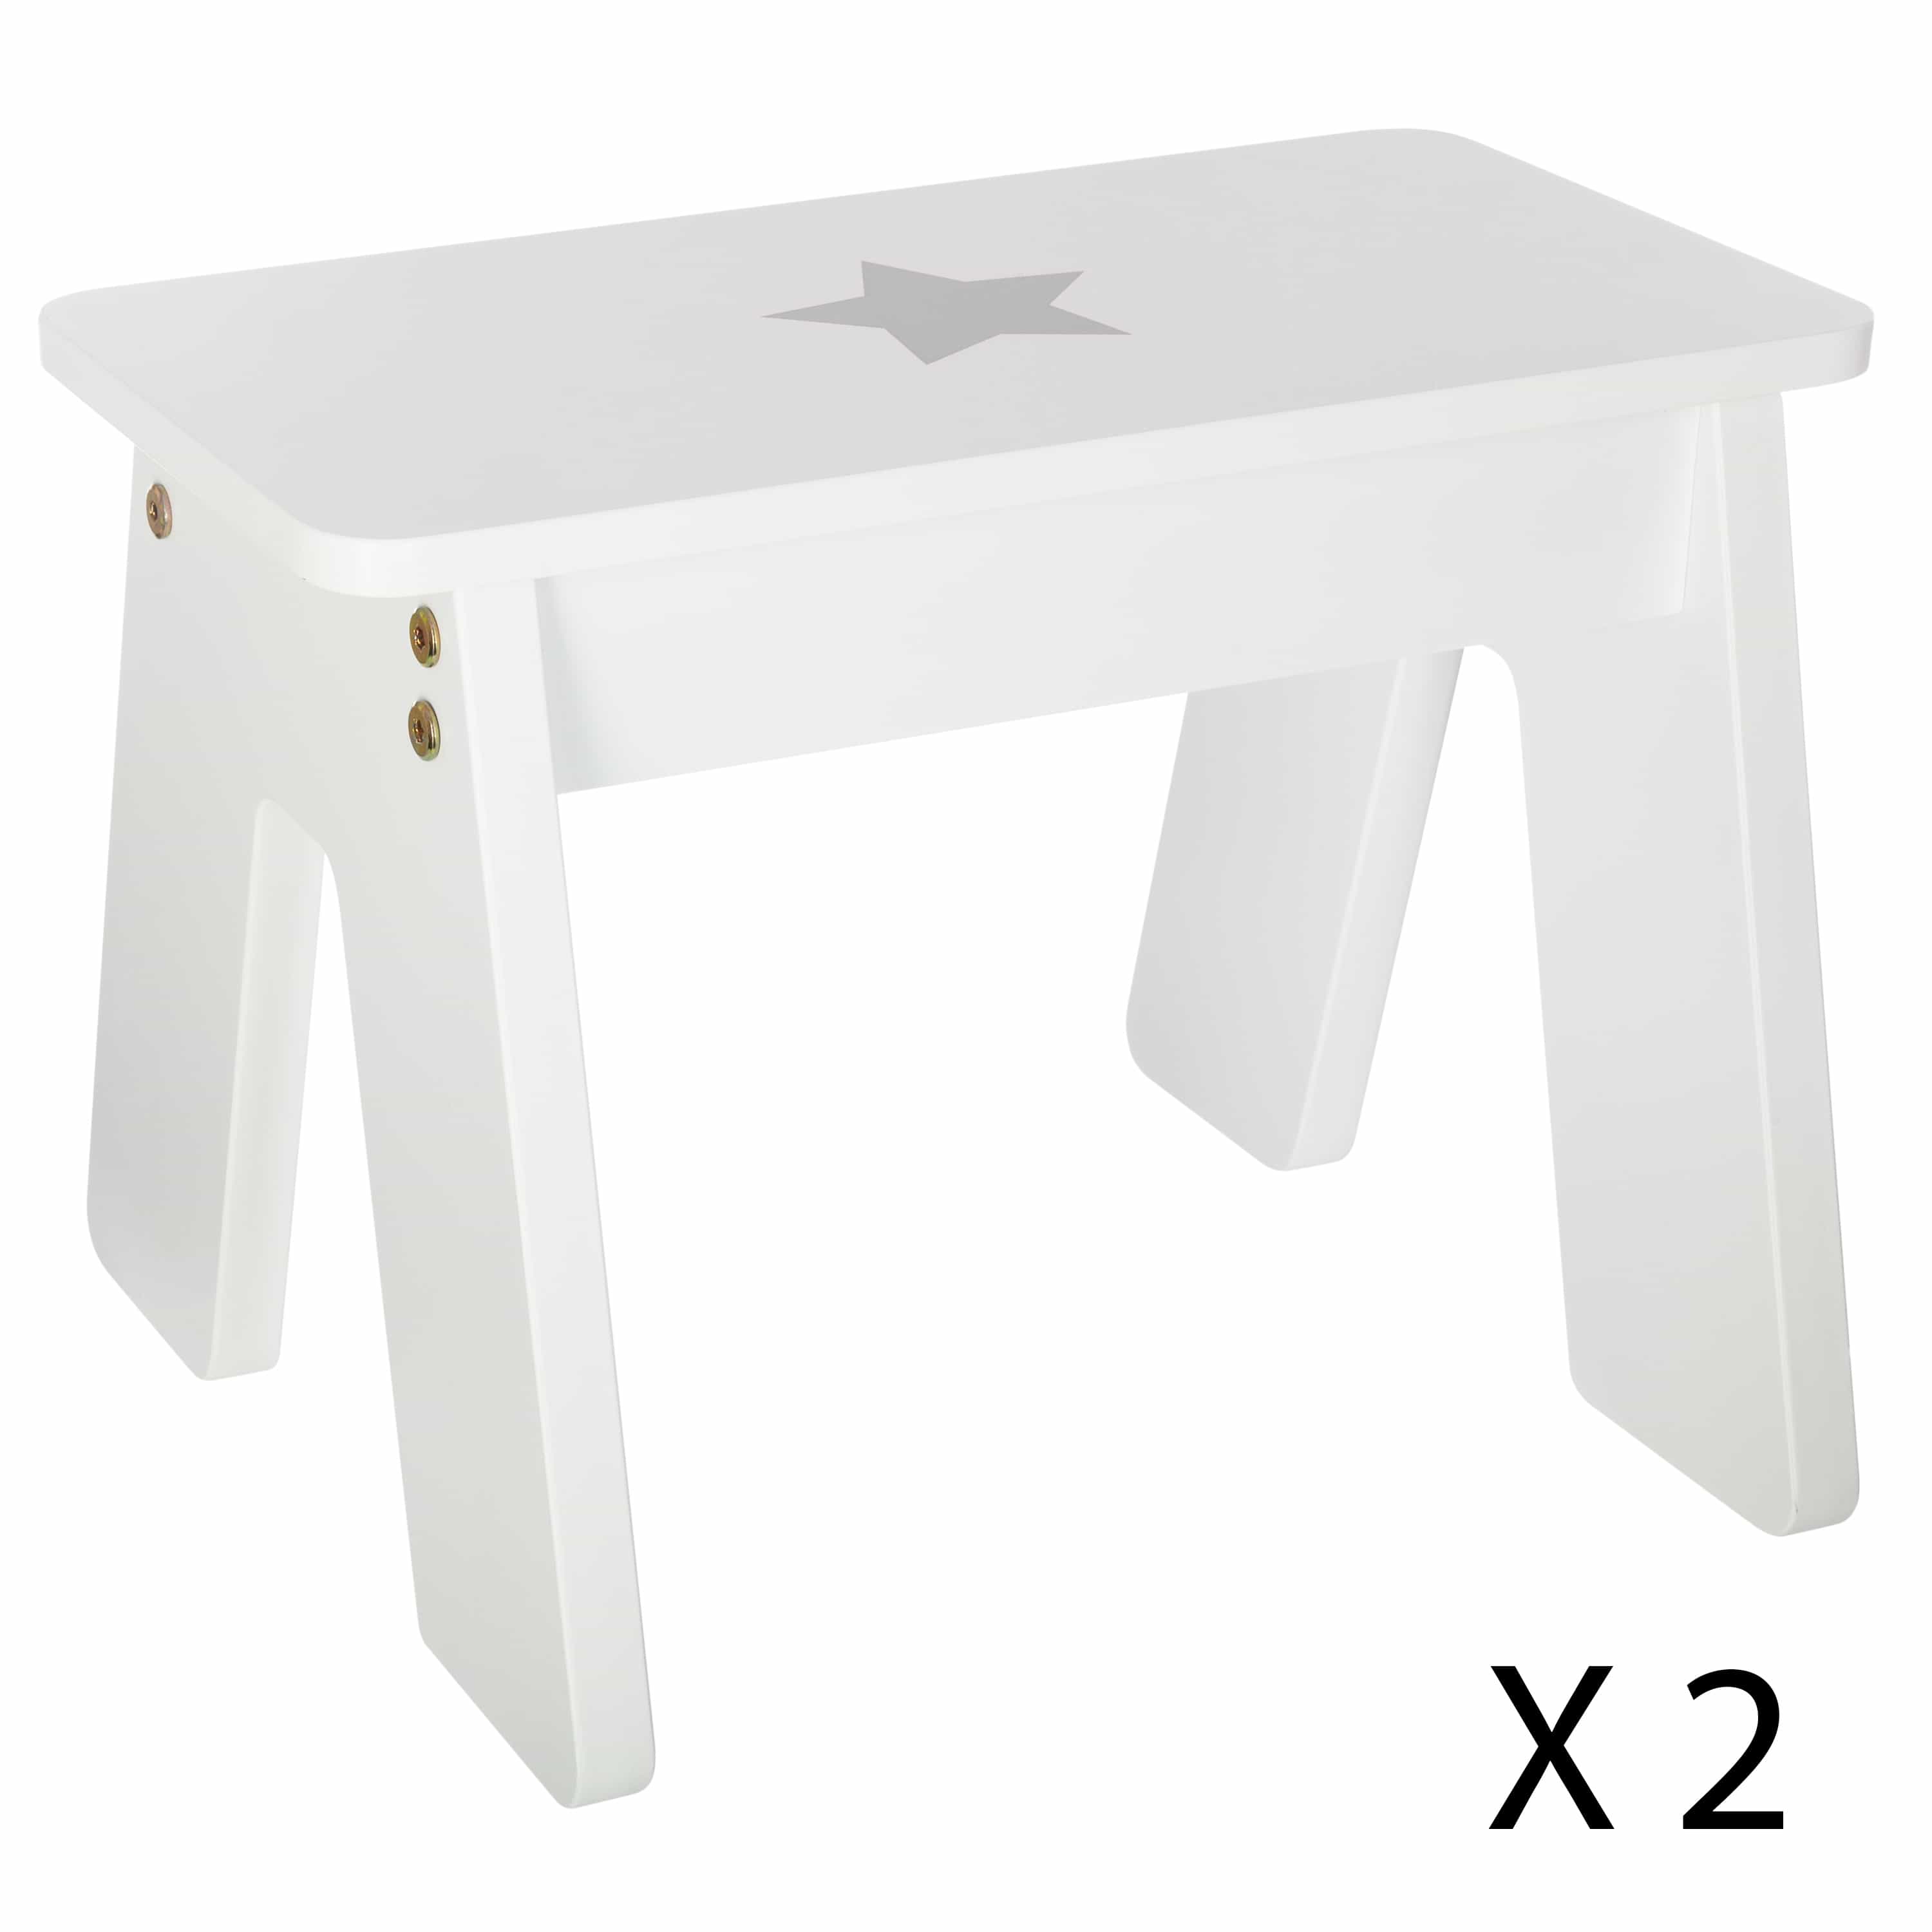 4goodz Boy set 3-delige set Kindertafel met stoelen 57x57x51cm - Wit